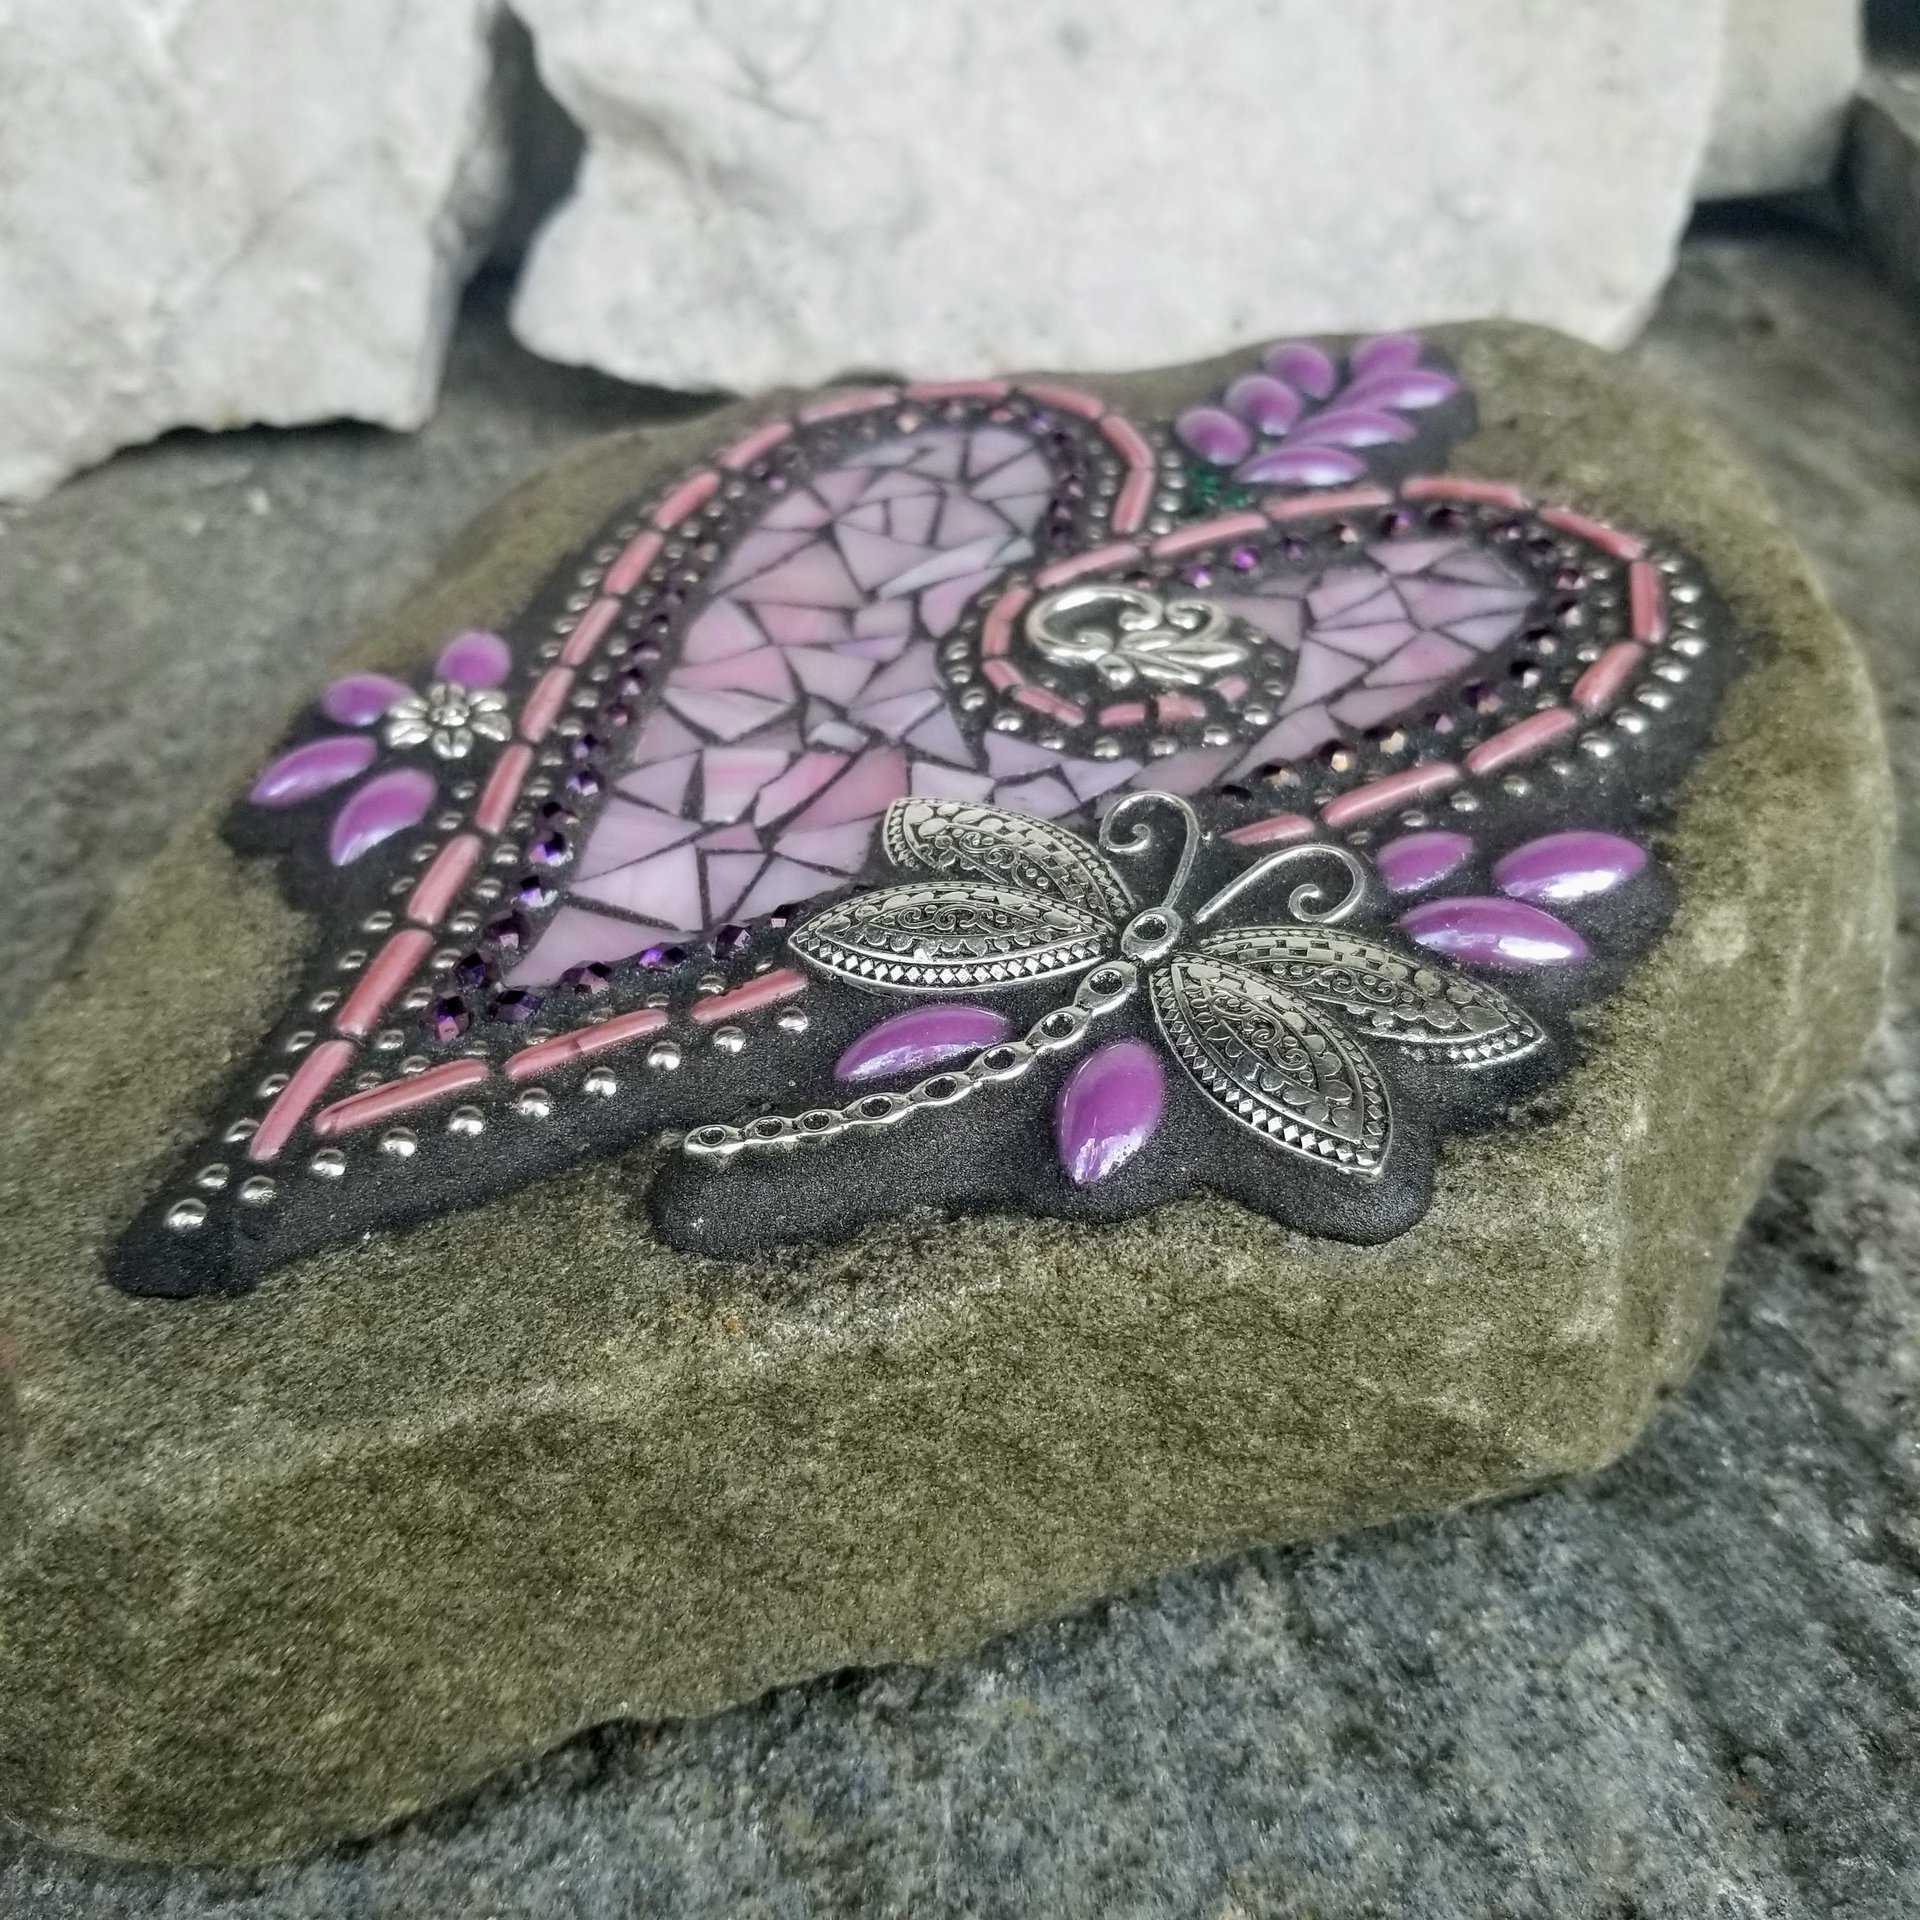 Pink and Purple Flower Mosaic Heart, Garden Stone, Garden Decor